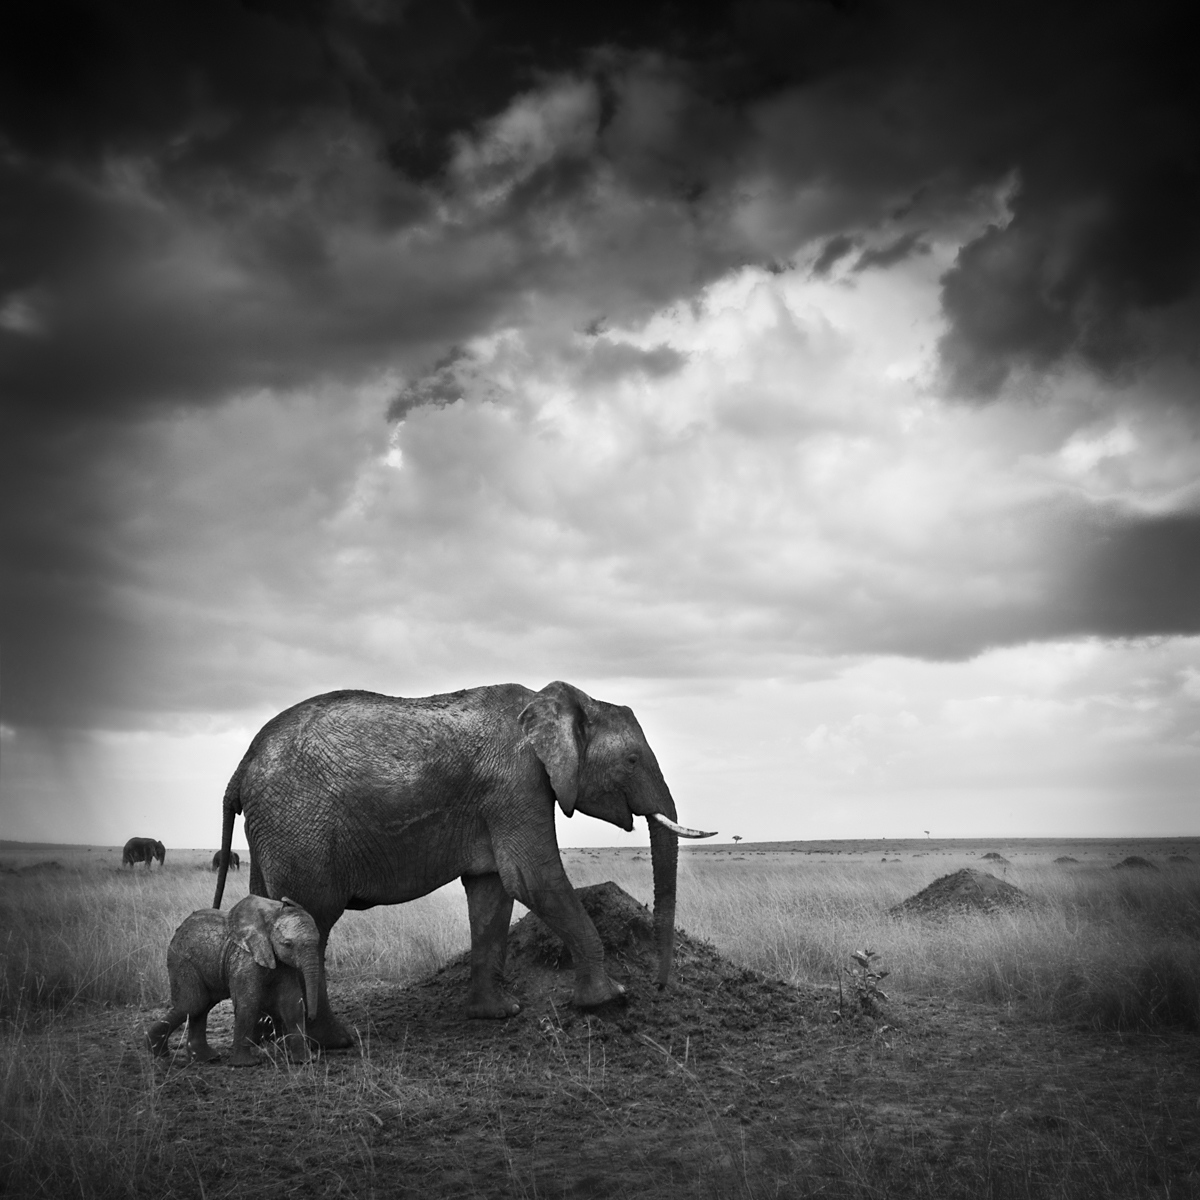 Elephants On Termite Mound - Maasai Mara, Kenya